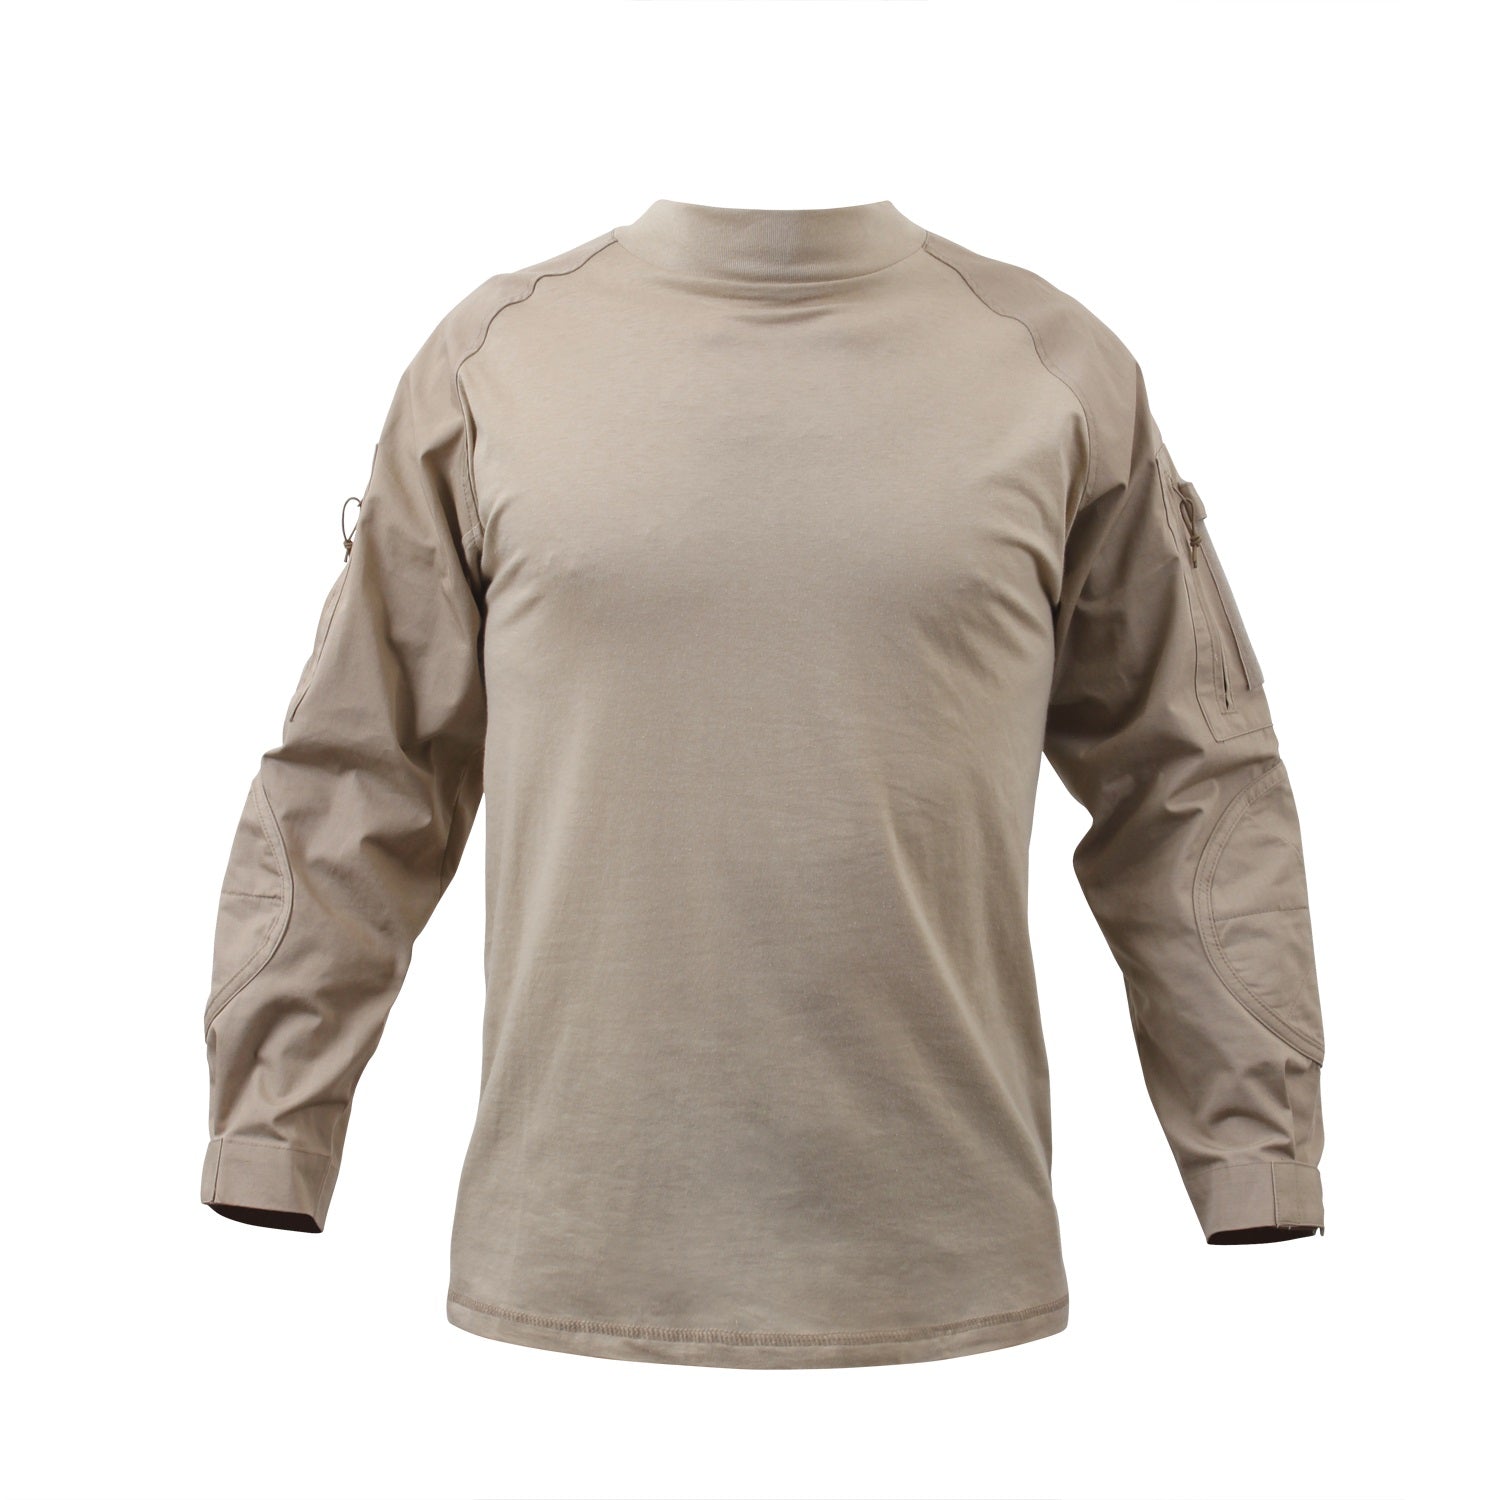 Rothco Military NYCO FR Fire Retardant Combat Shirt Desert Sand